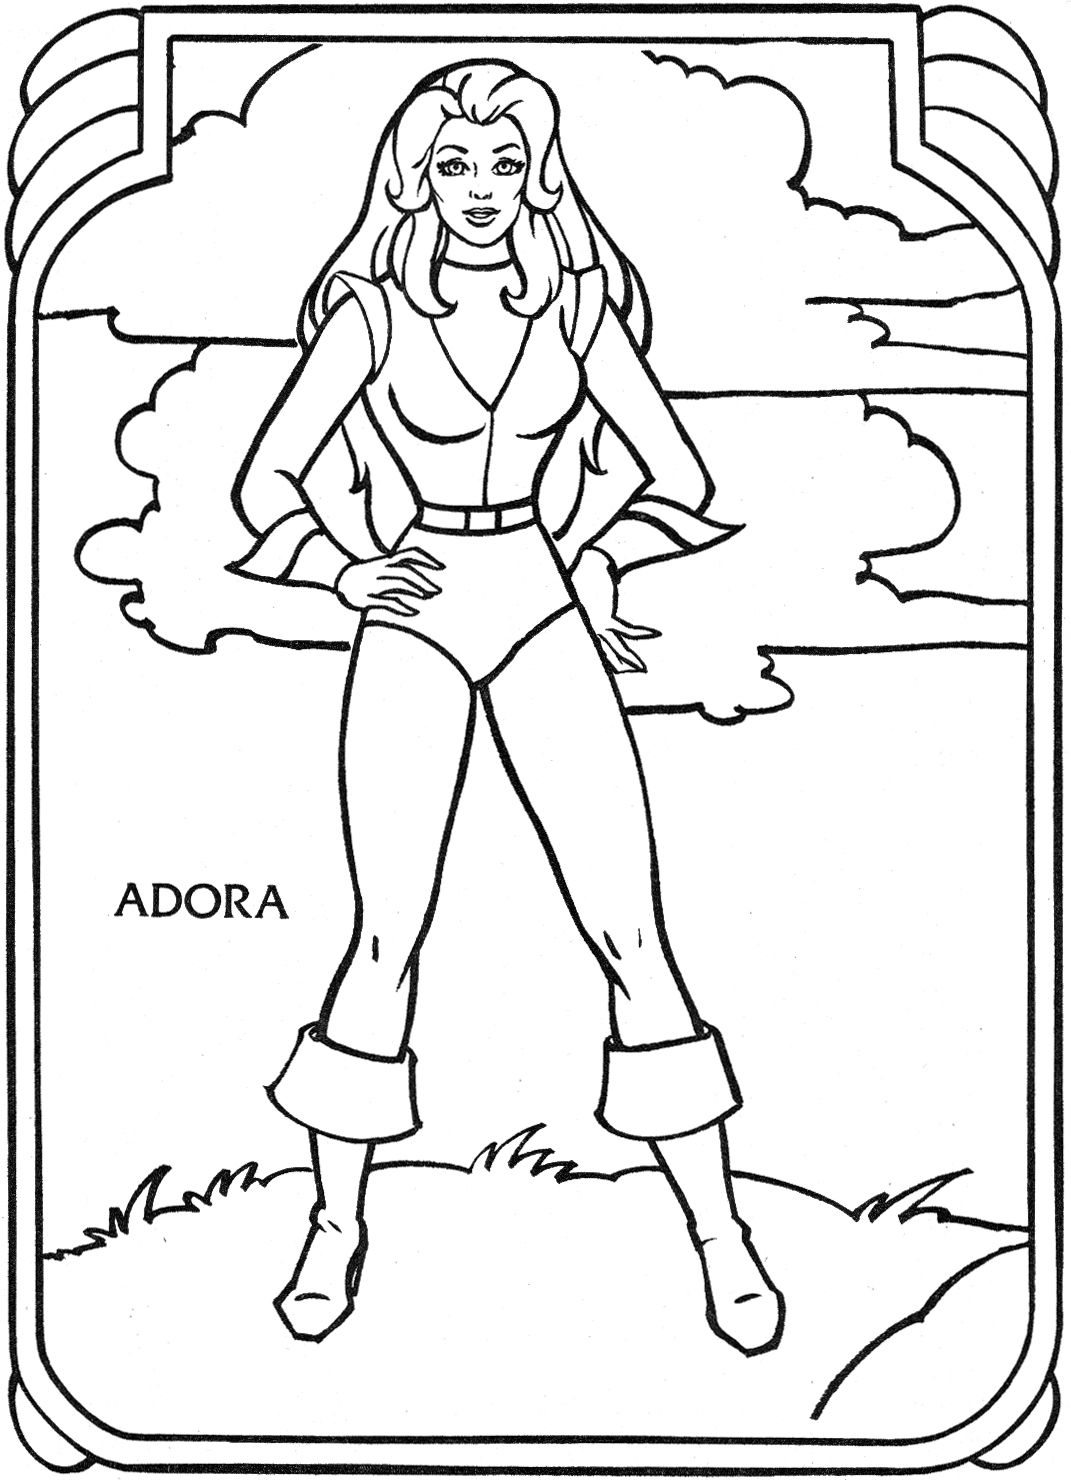 She-Ra: Princess of Power (1985) - coloring book 21